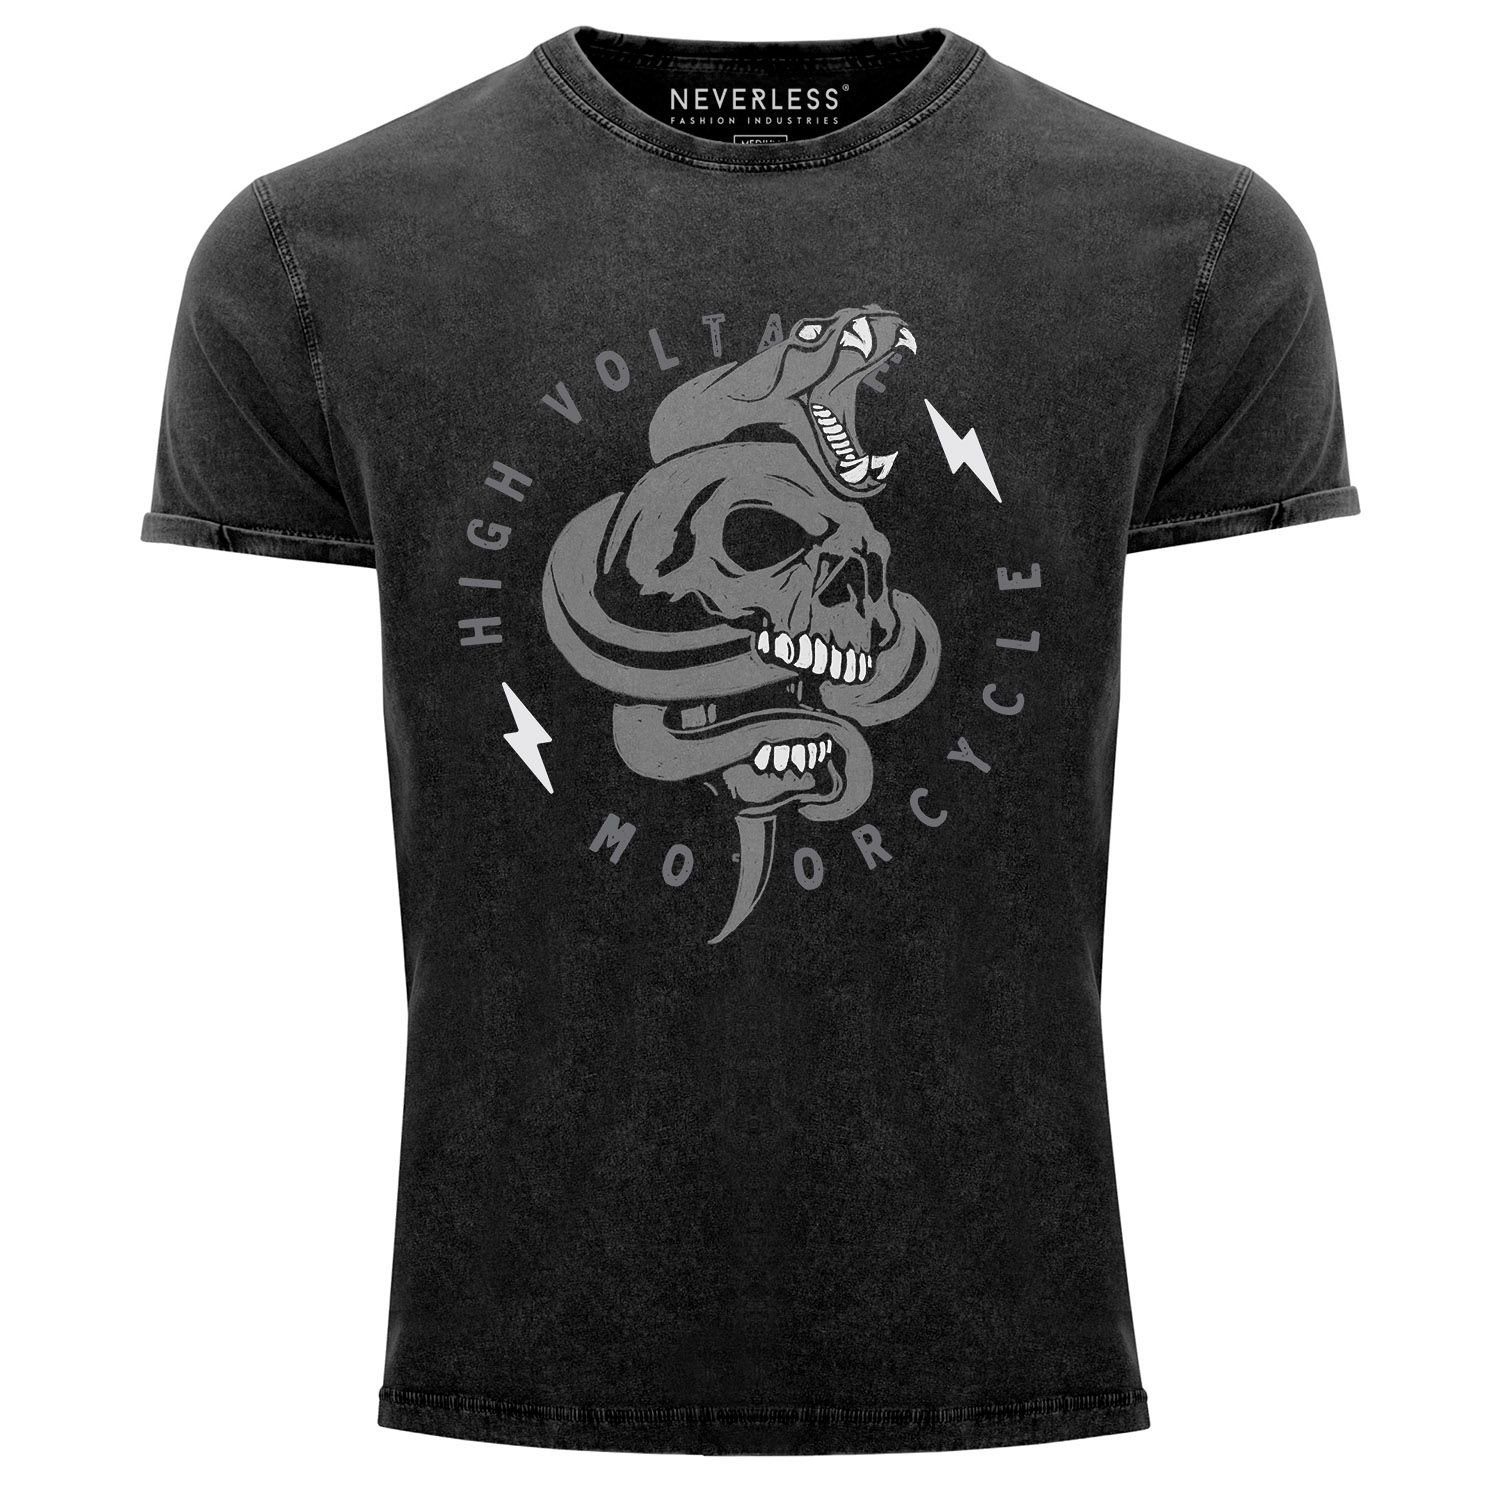 Neverless Print-Shirt Neverless® Herren T-Shirt Totenkopf Print Kobra Motiv High Voltage Motorcycle Schriftzug Rocker Biker Racing Design Used Look Slim Fit mit Print